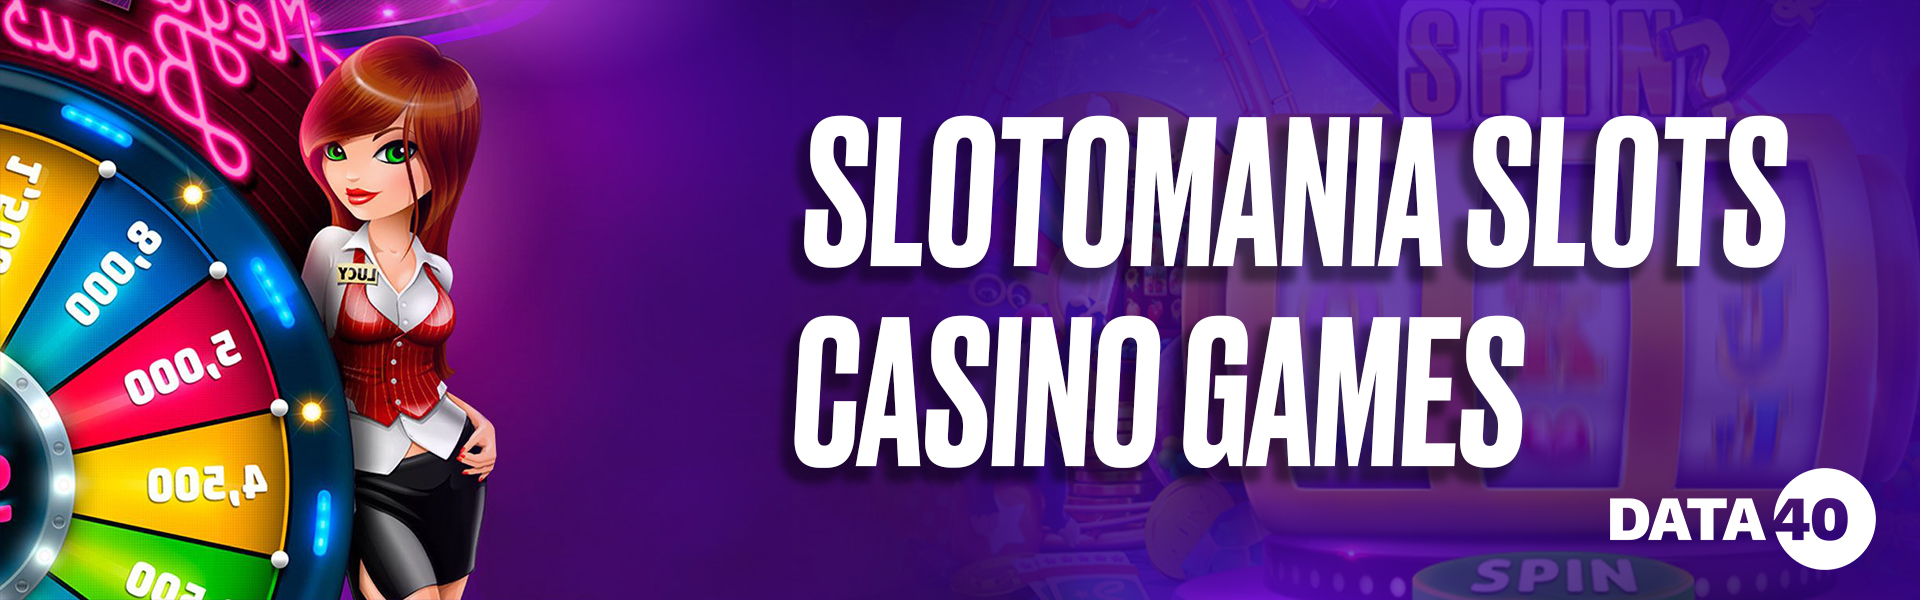 Slotomania Slots Casino Games